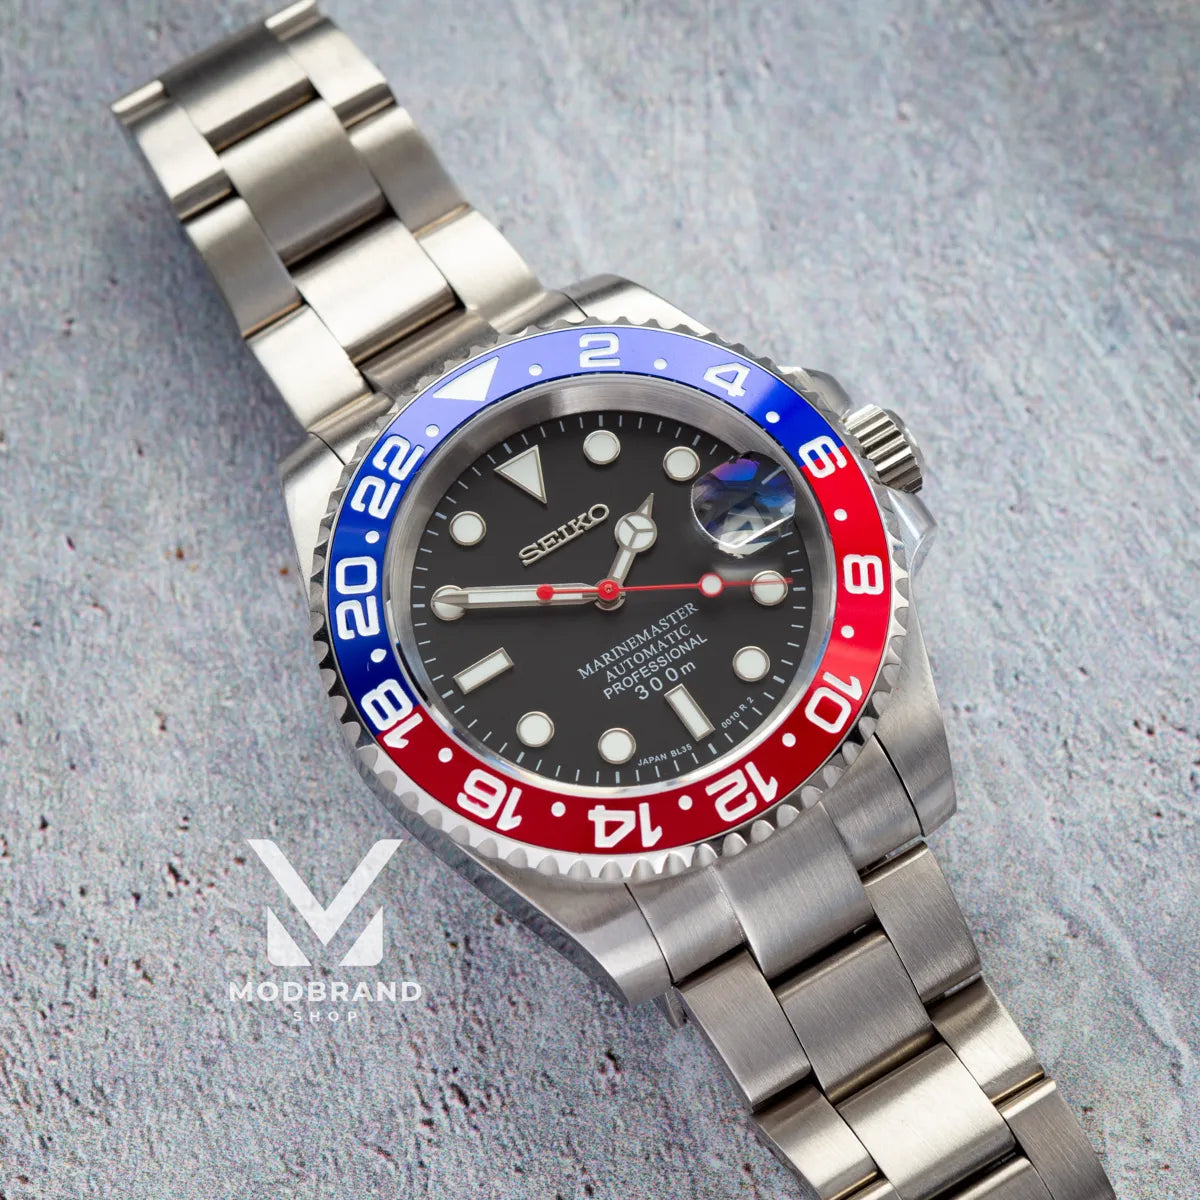 Seiko Mod Pepsi Submariner Watch - Pepsi Watch